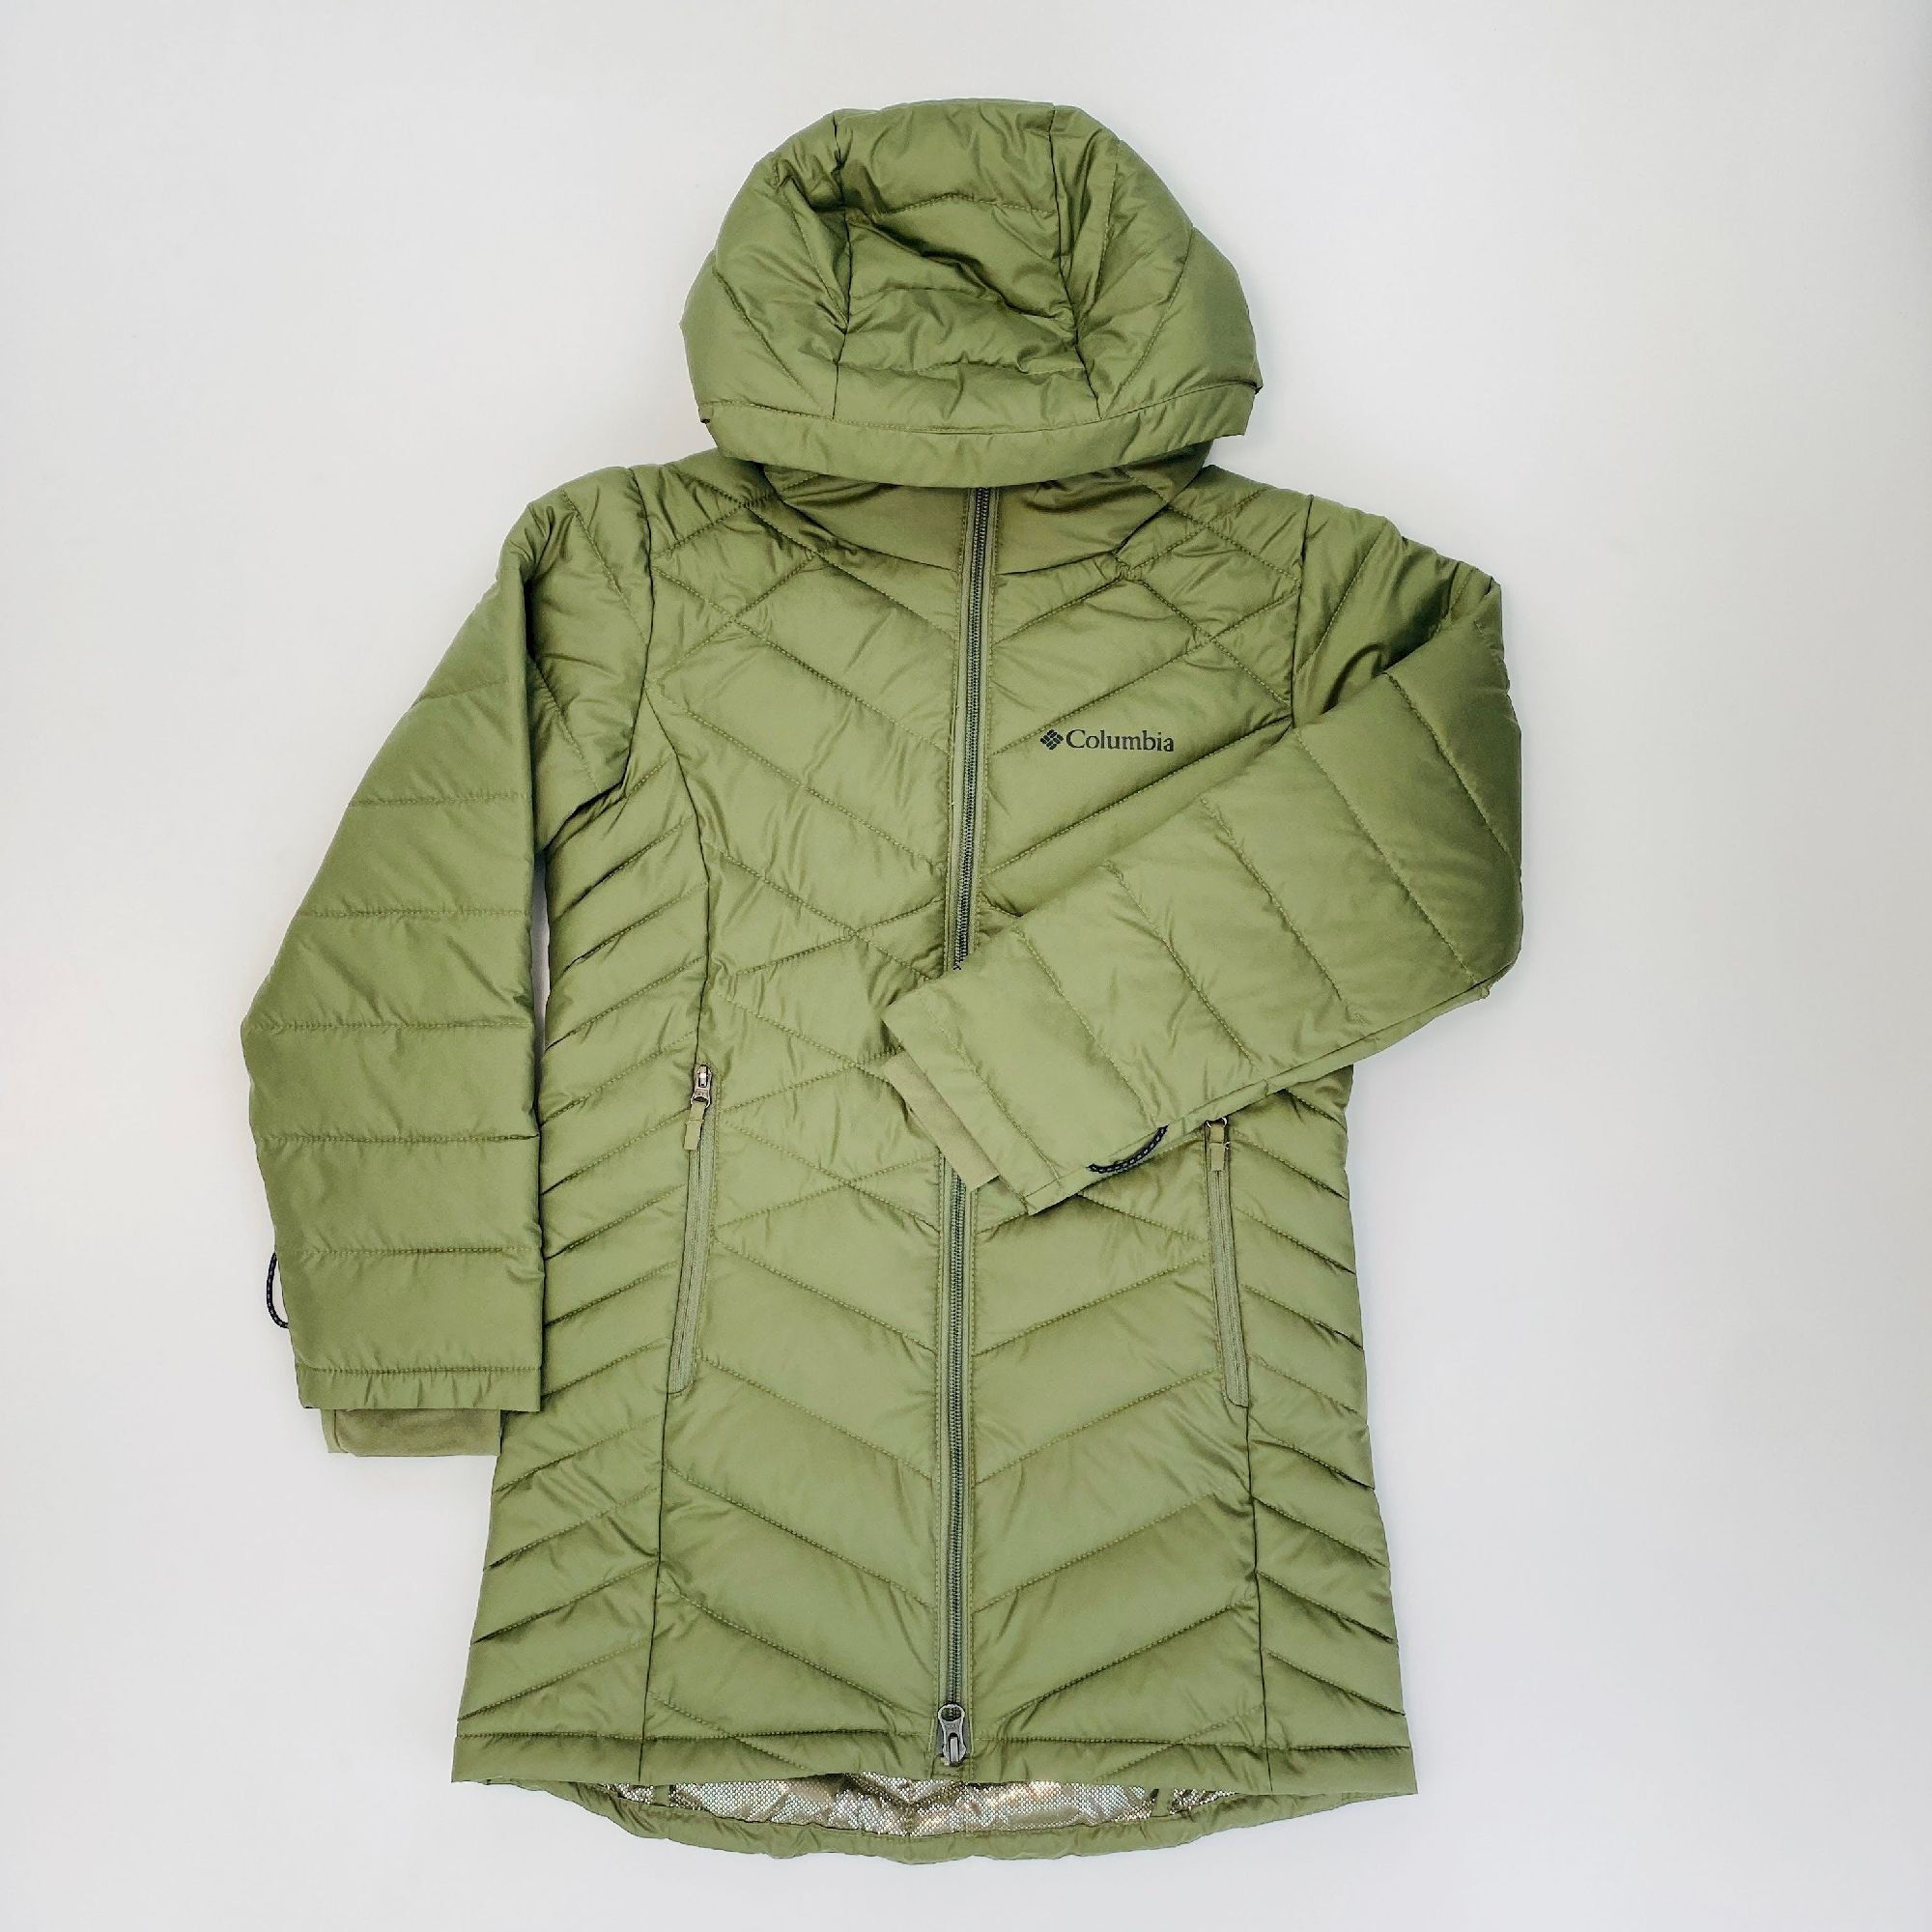 Columbia Heavenly™ Long Jacket - Giacca sintetica di seconda mano - Bambino - Verde oliva - S | Hardloop